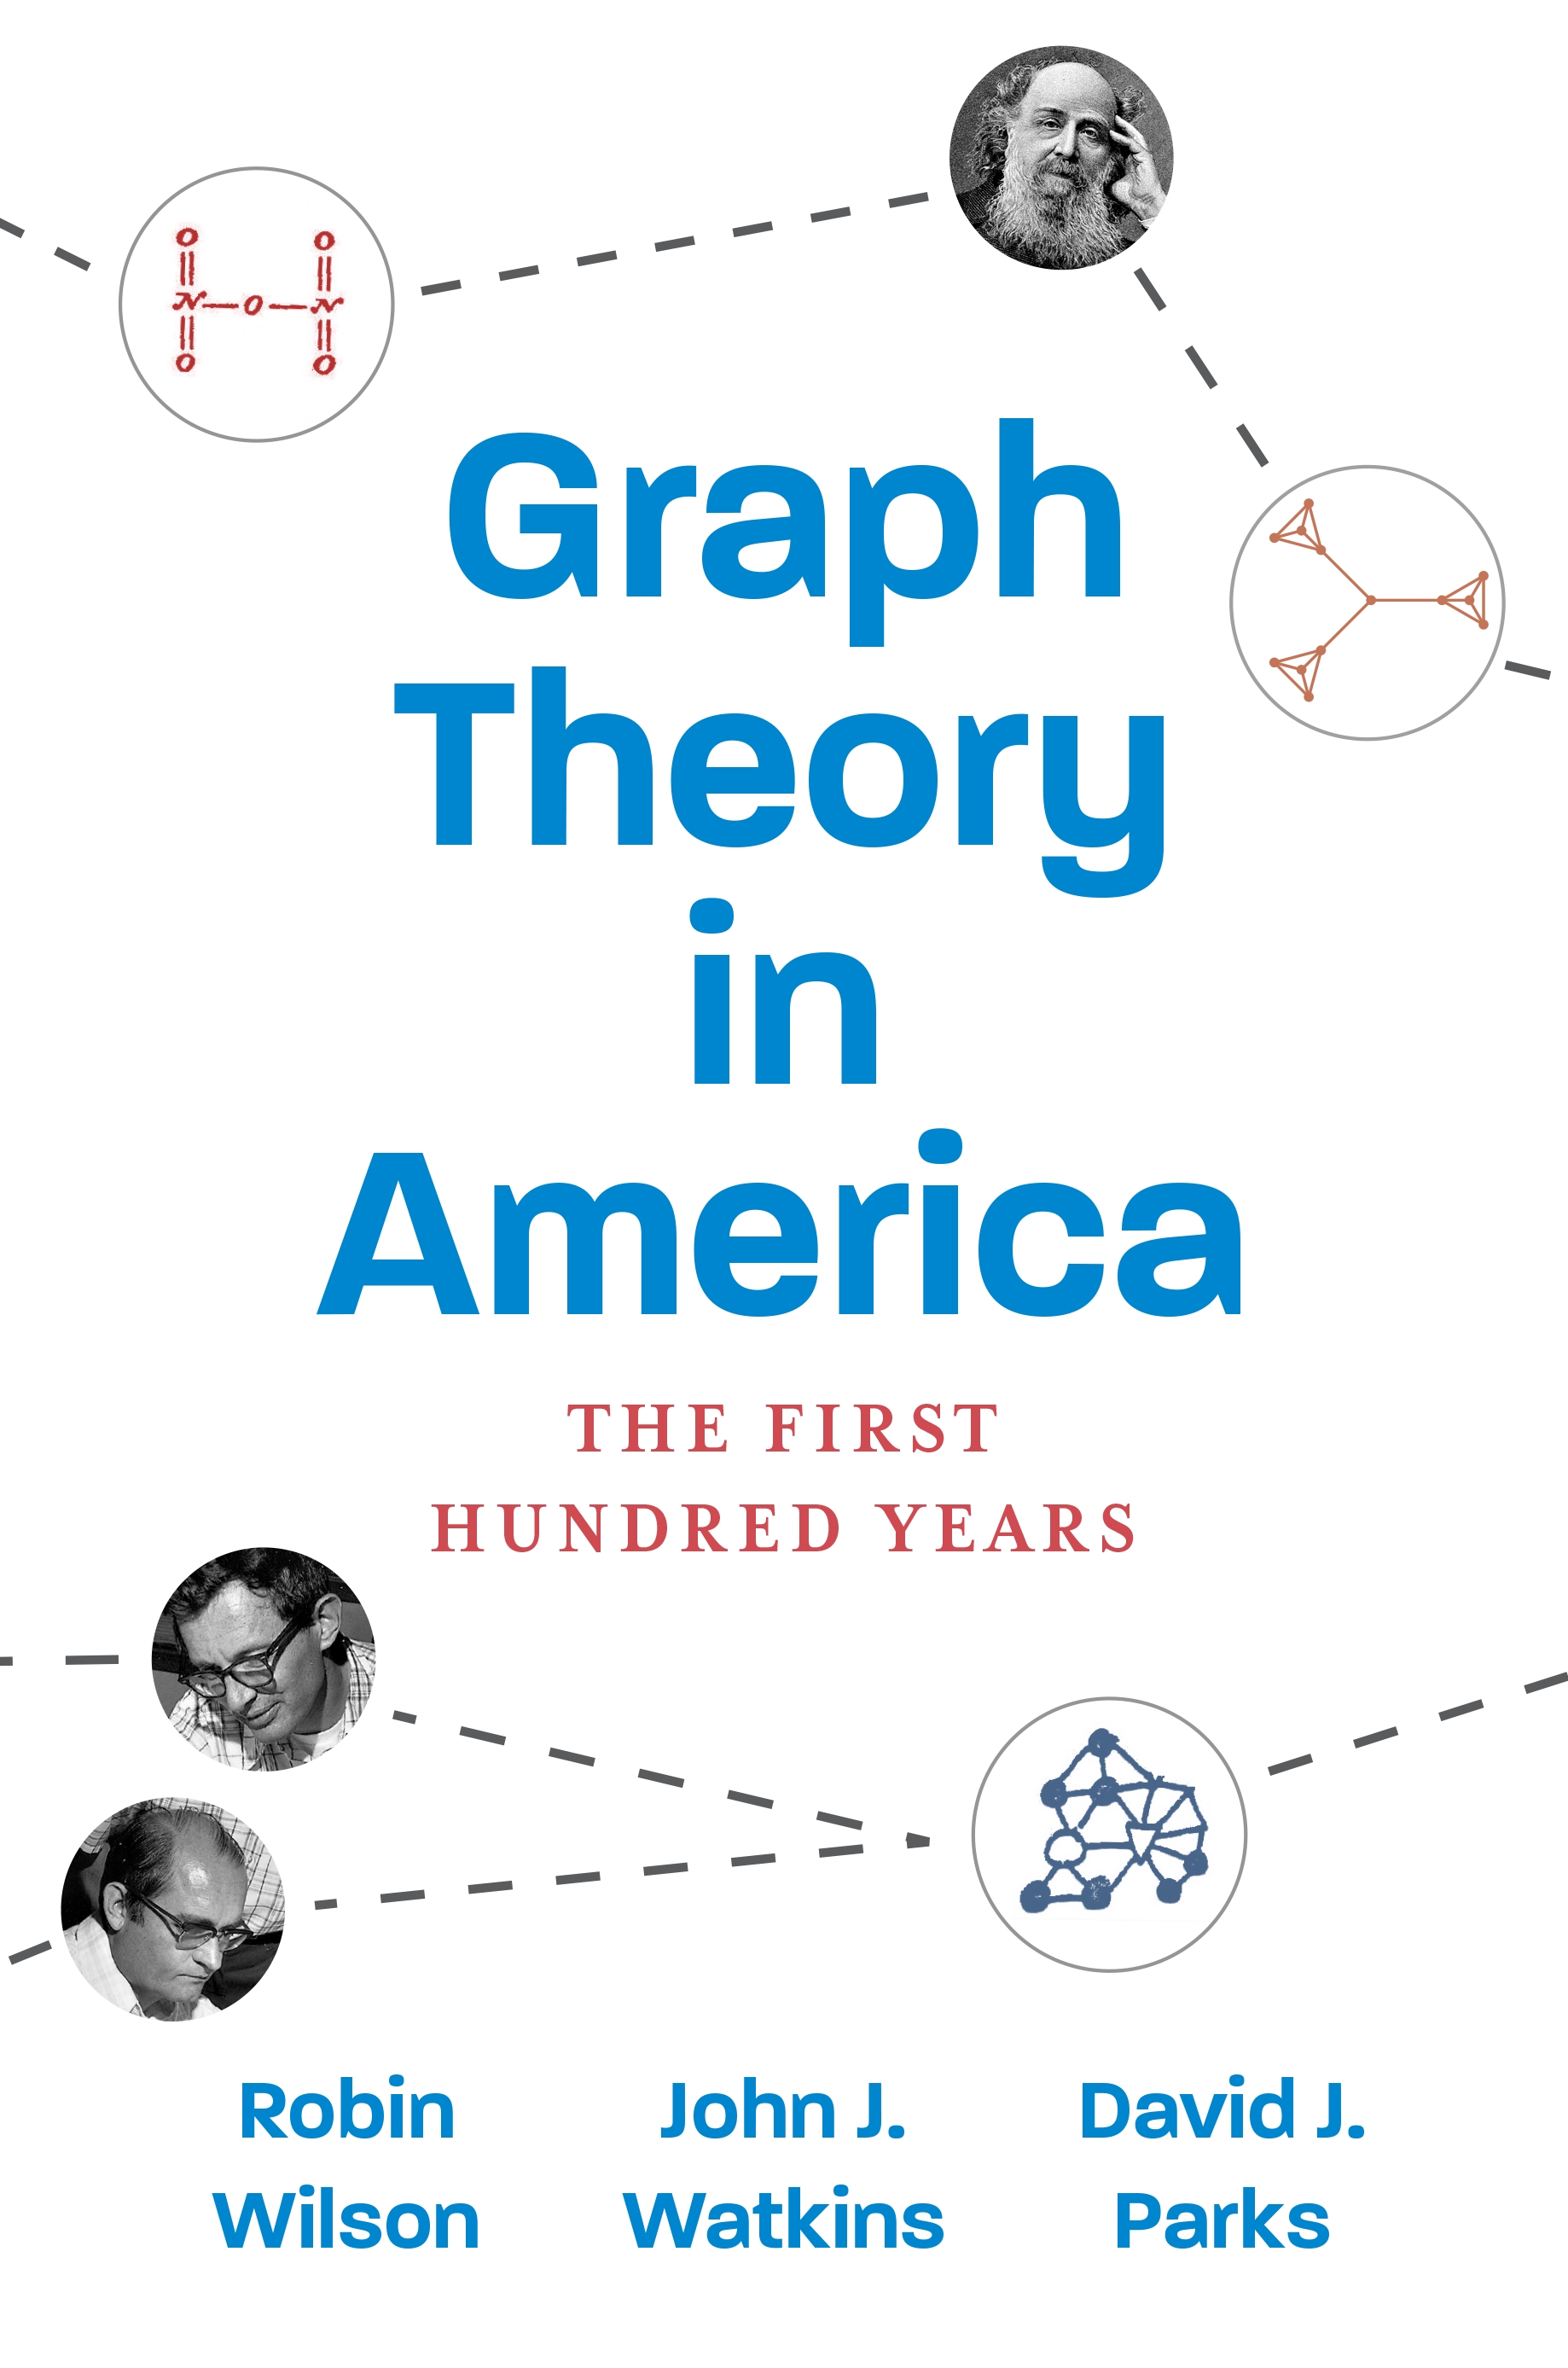 Press　in　Theory　Princeton　University　Graph　America